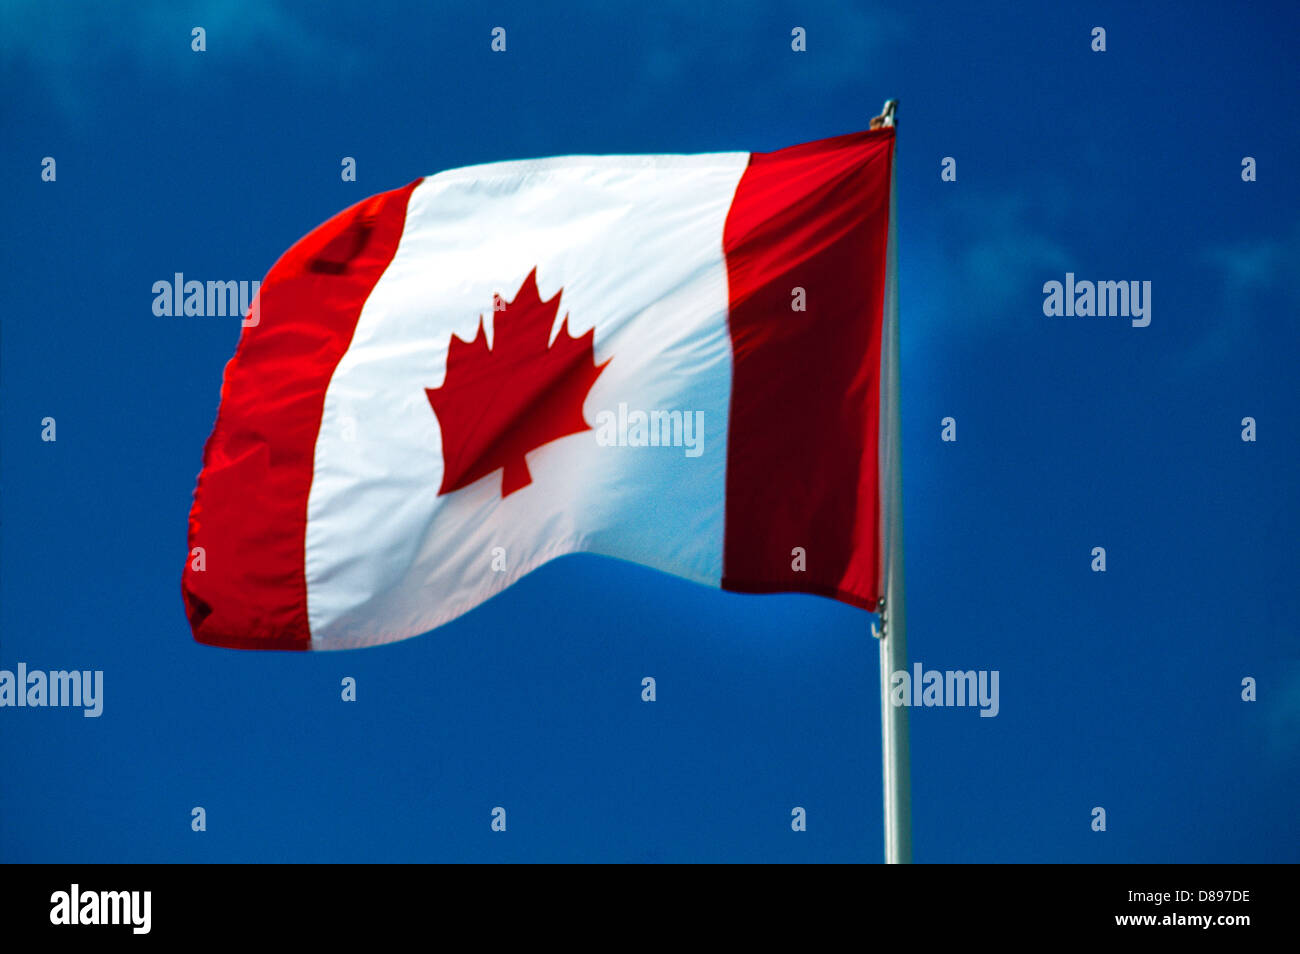 Canada - drapeau Canadien Banque D'Images